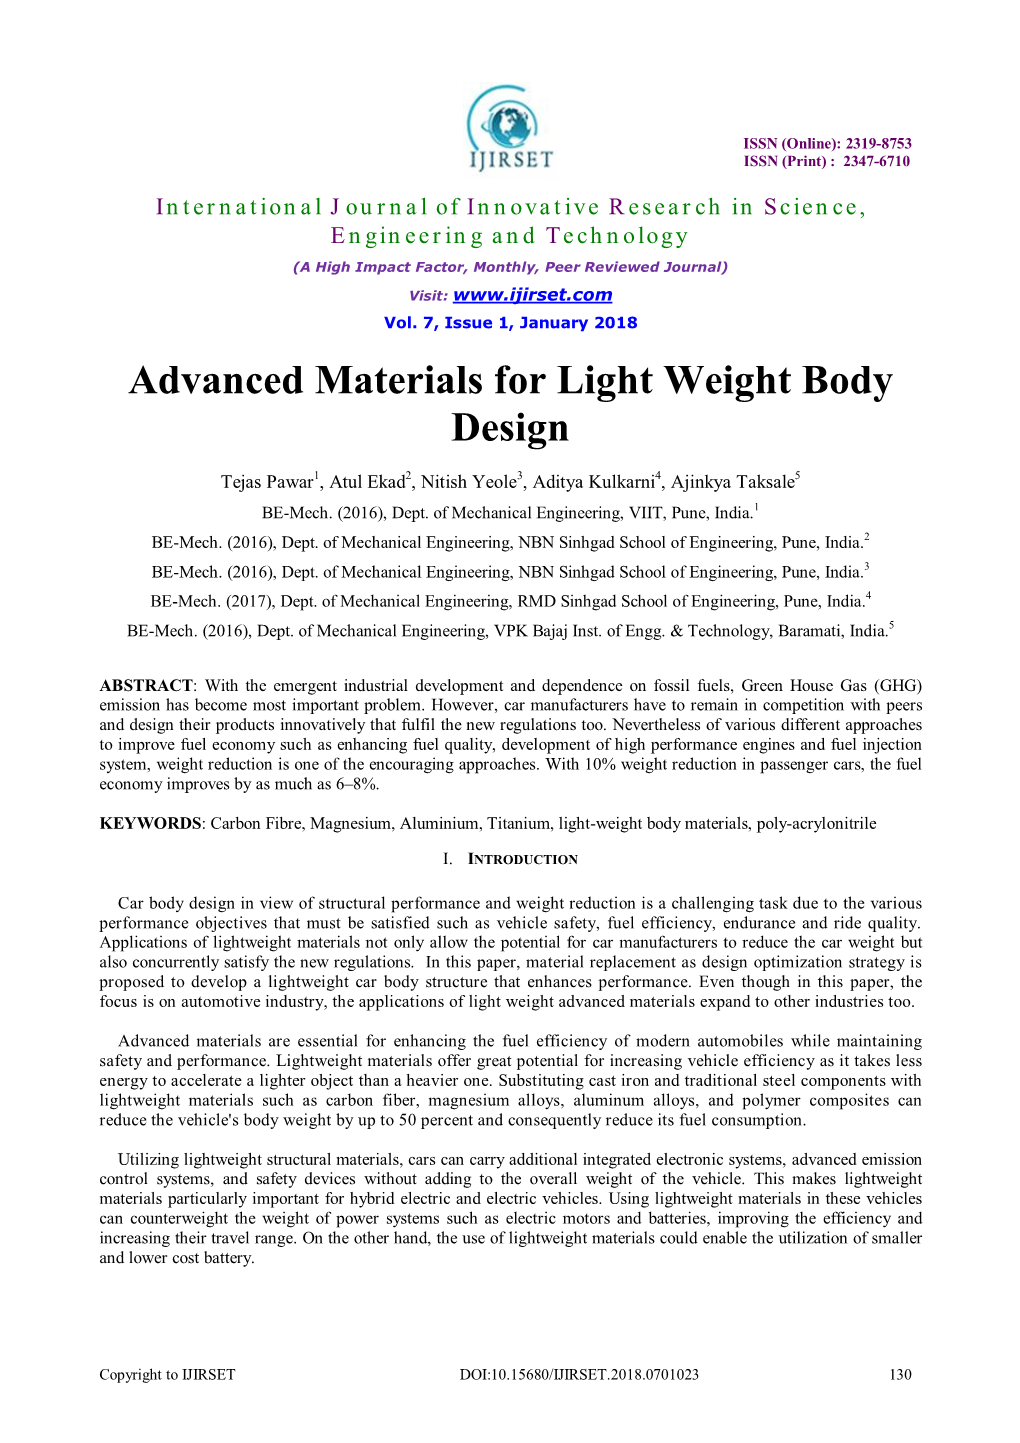 Advanced Materials for Light Weight Body Design